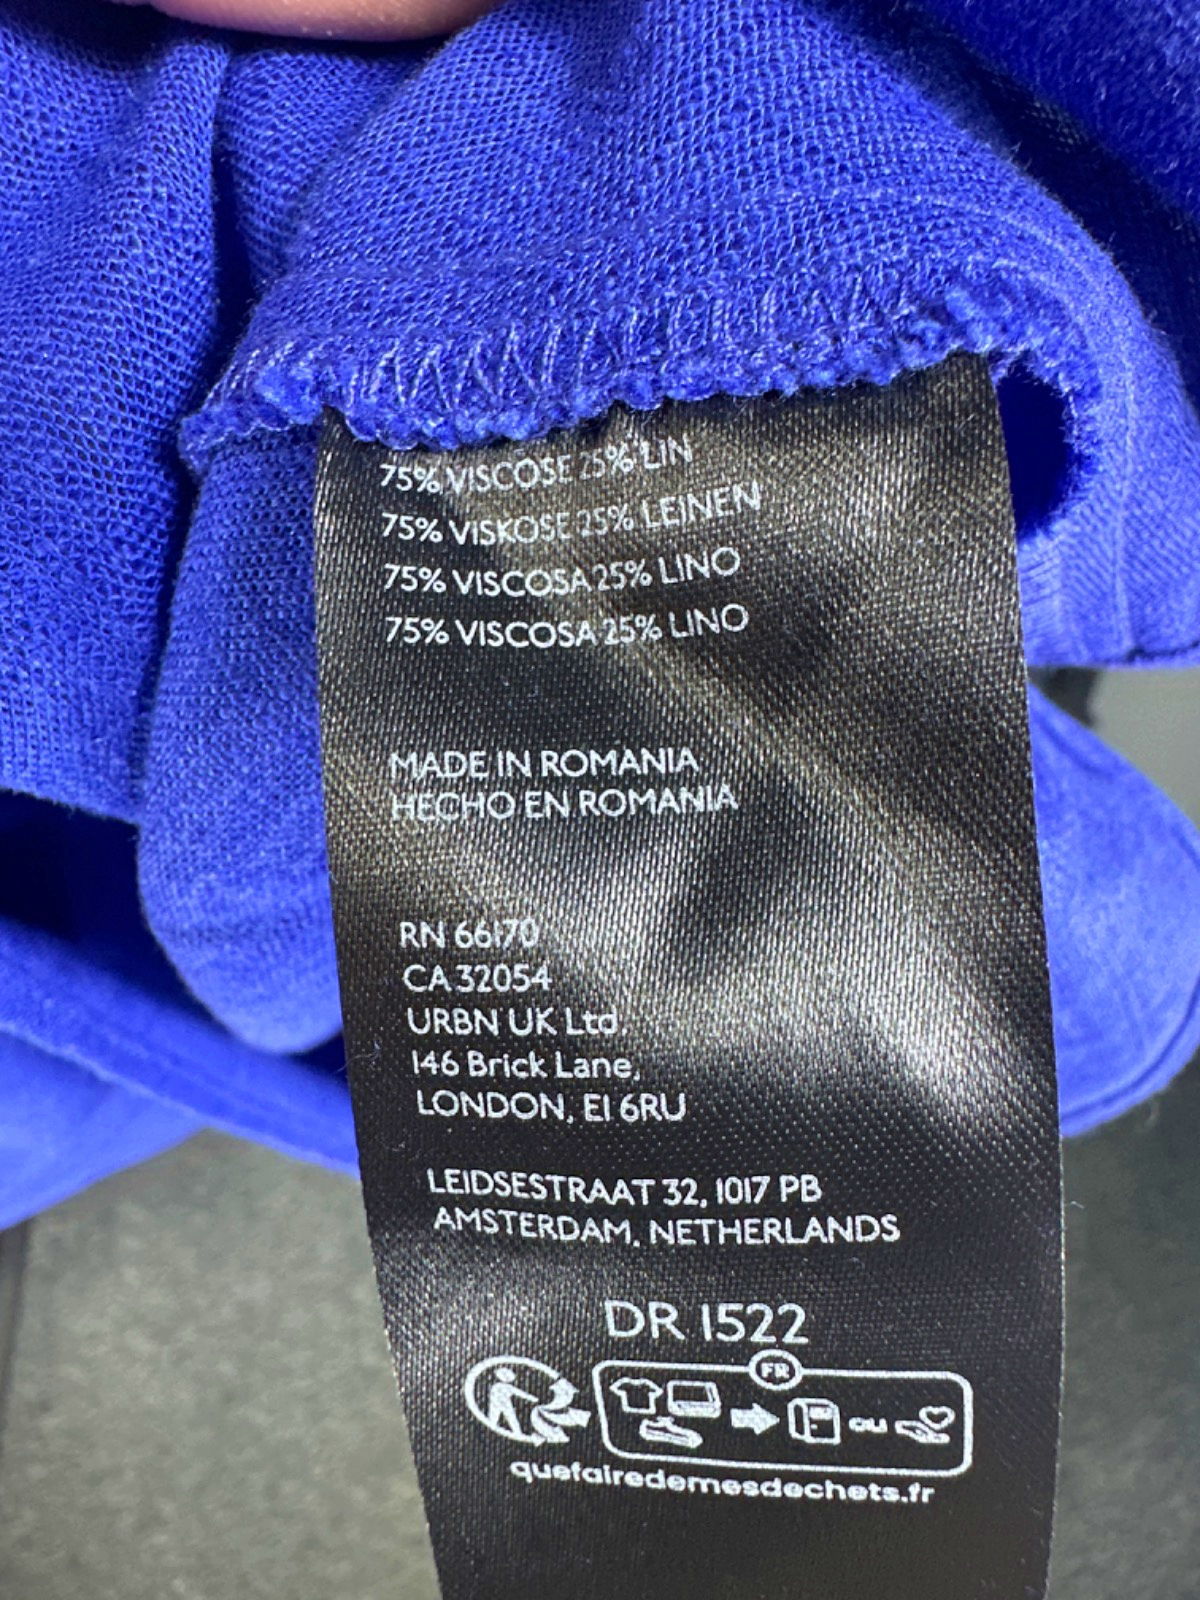 Anthropologie Royal Blue Strapless Maxi Bandeau slip Dress UK 10